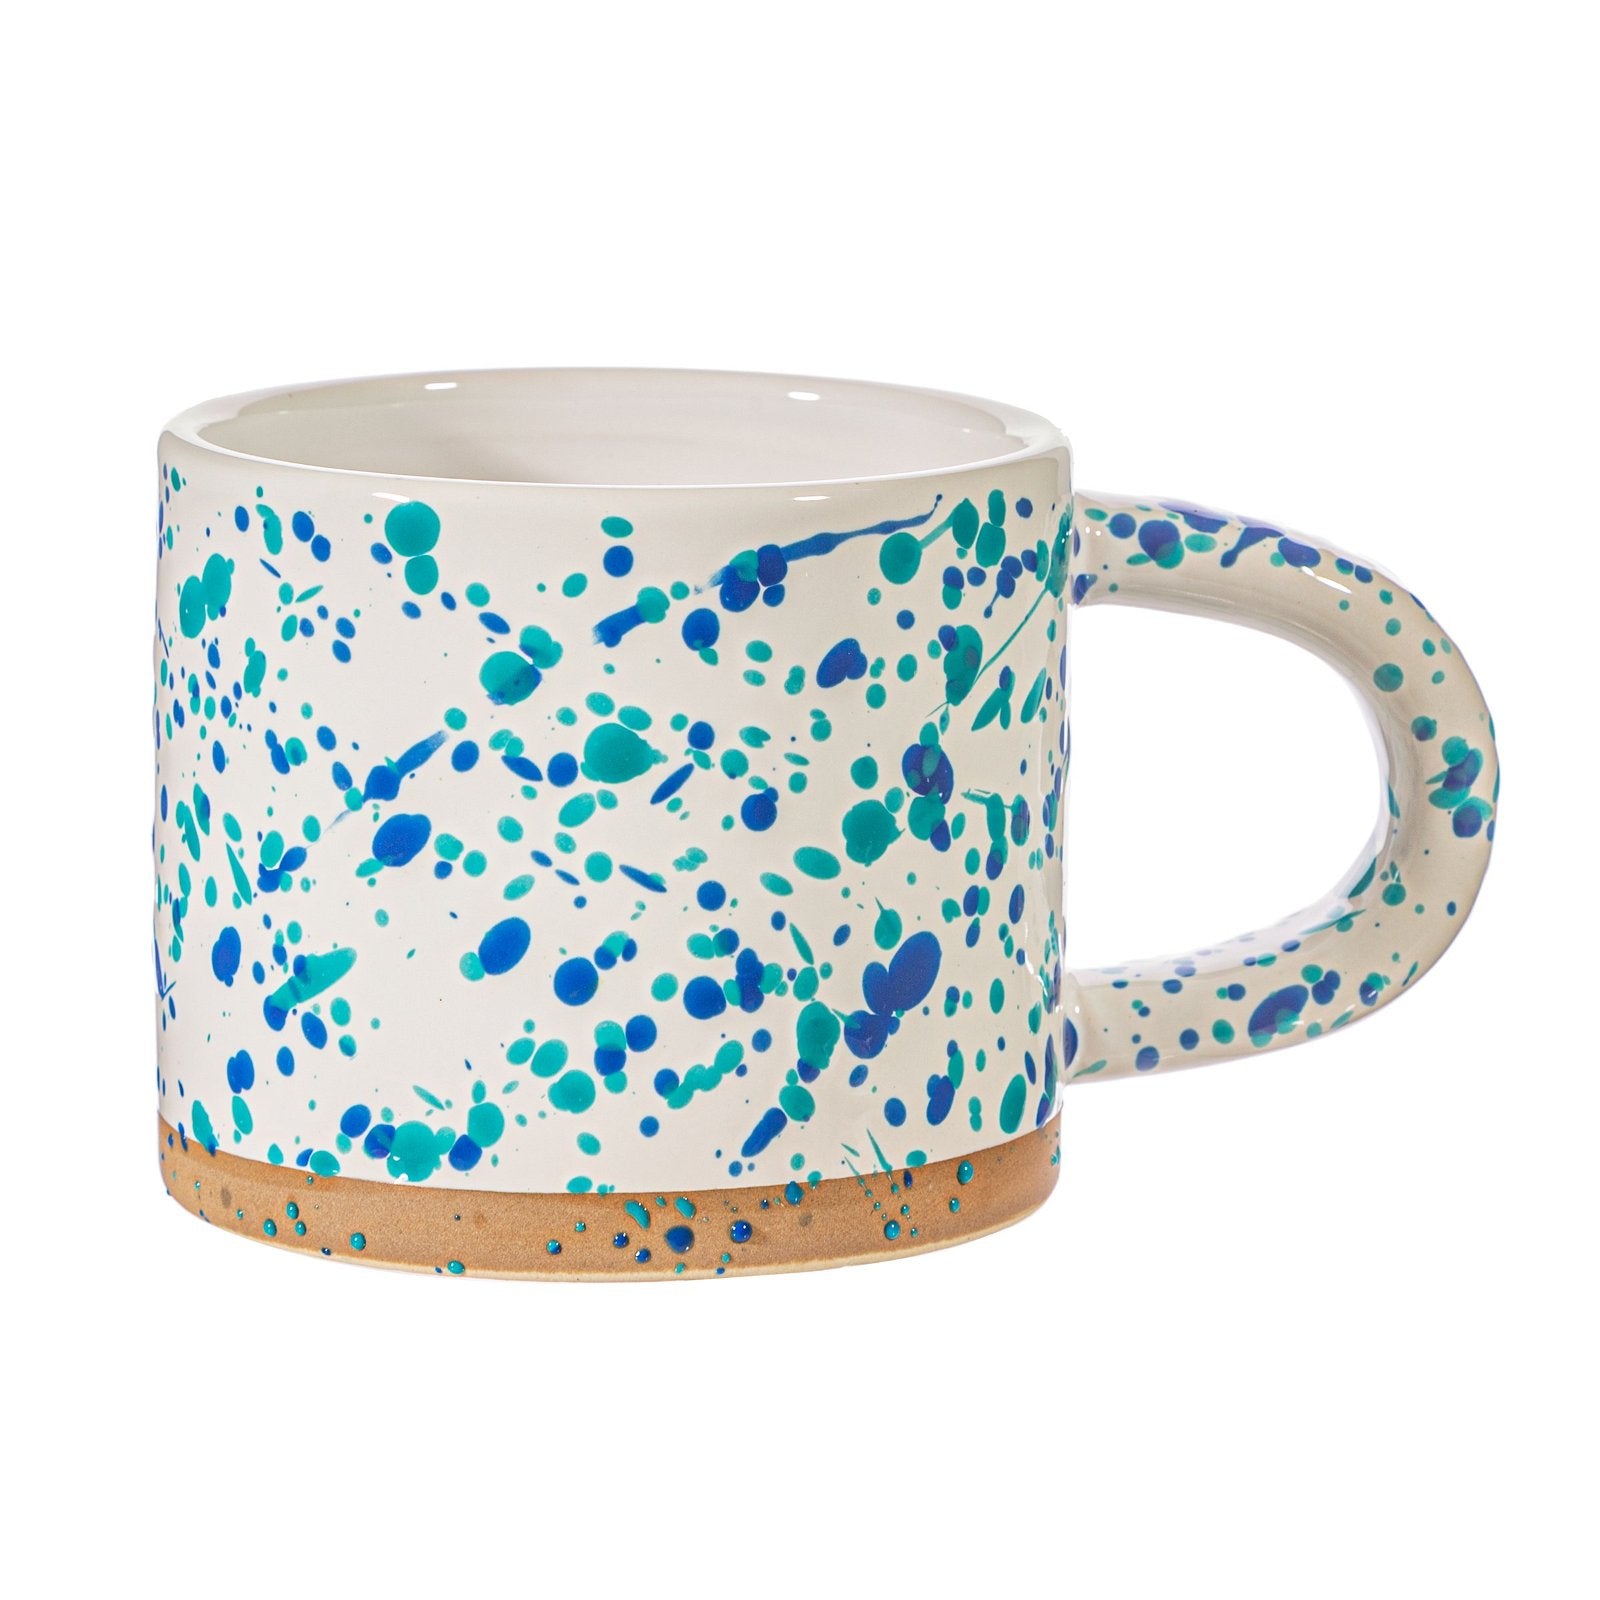 View Turquoise and Blue Splatterware Mug information